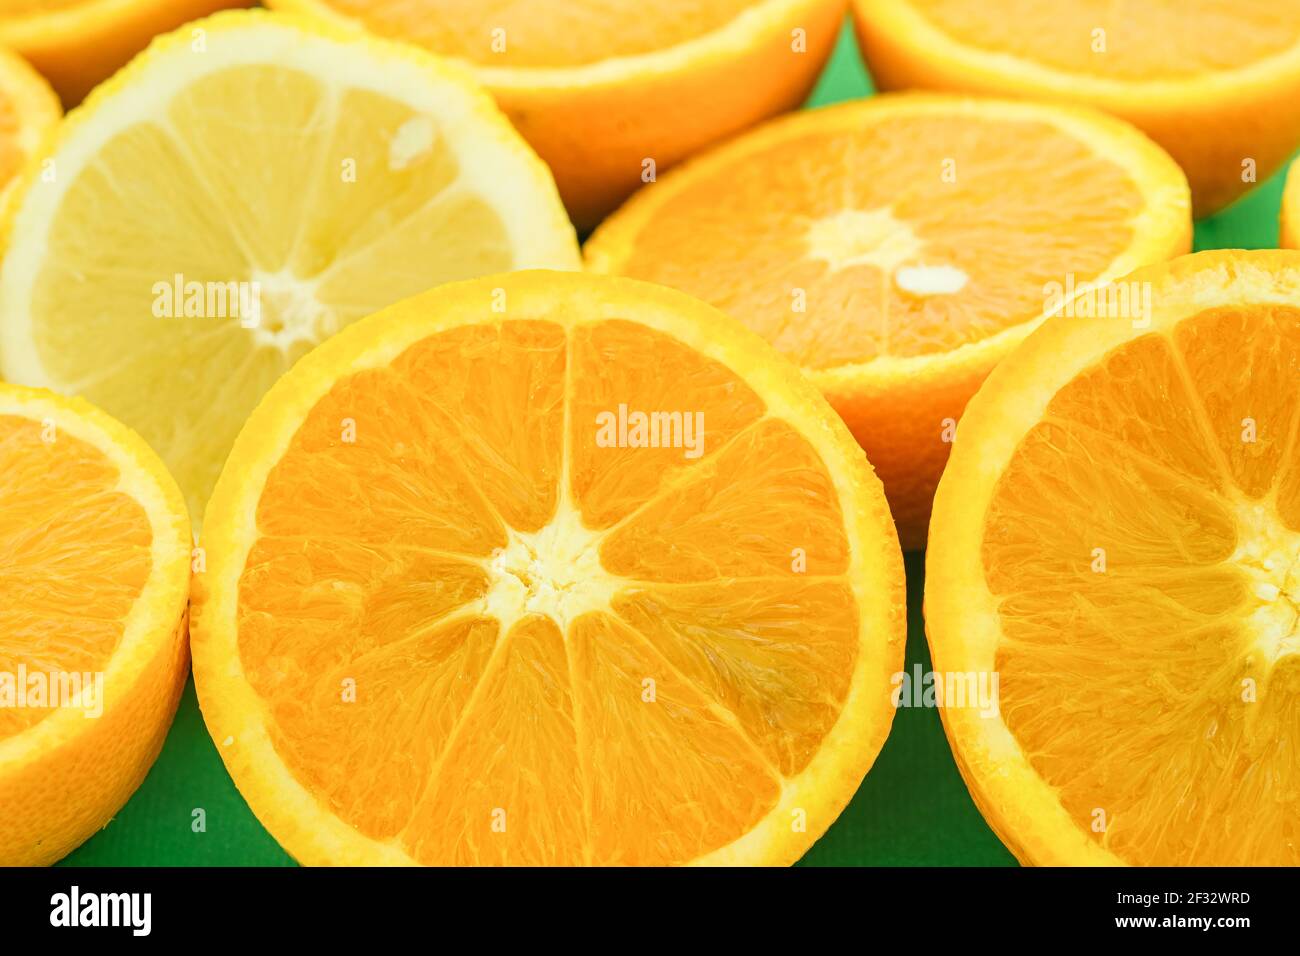 Juicy sliced oranges and lemons fruit background,seasonal citrus fruits,healthy eating Stock Photo